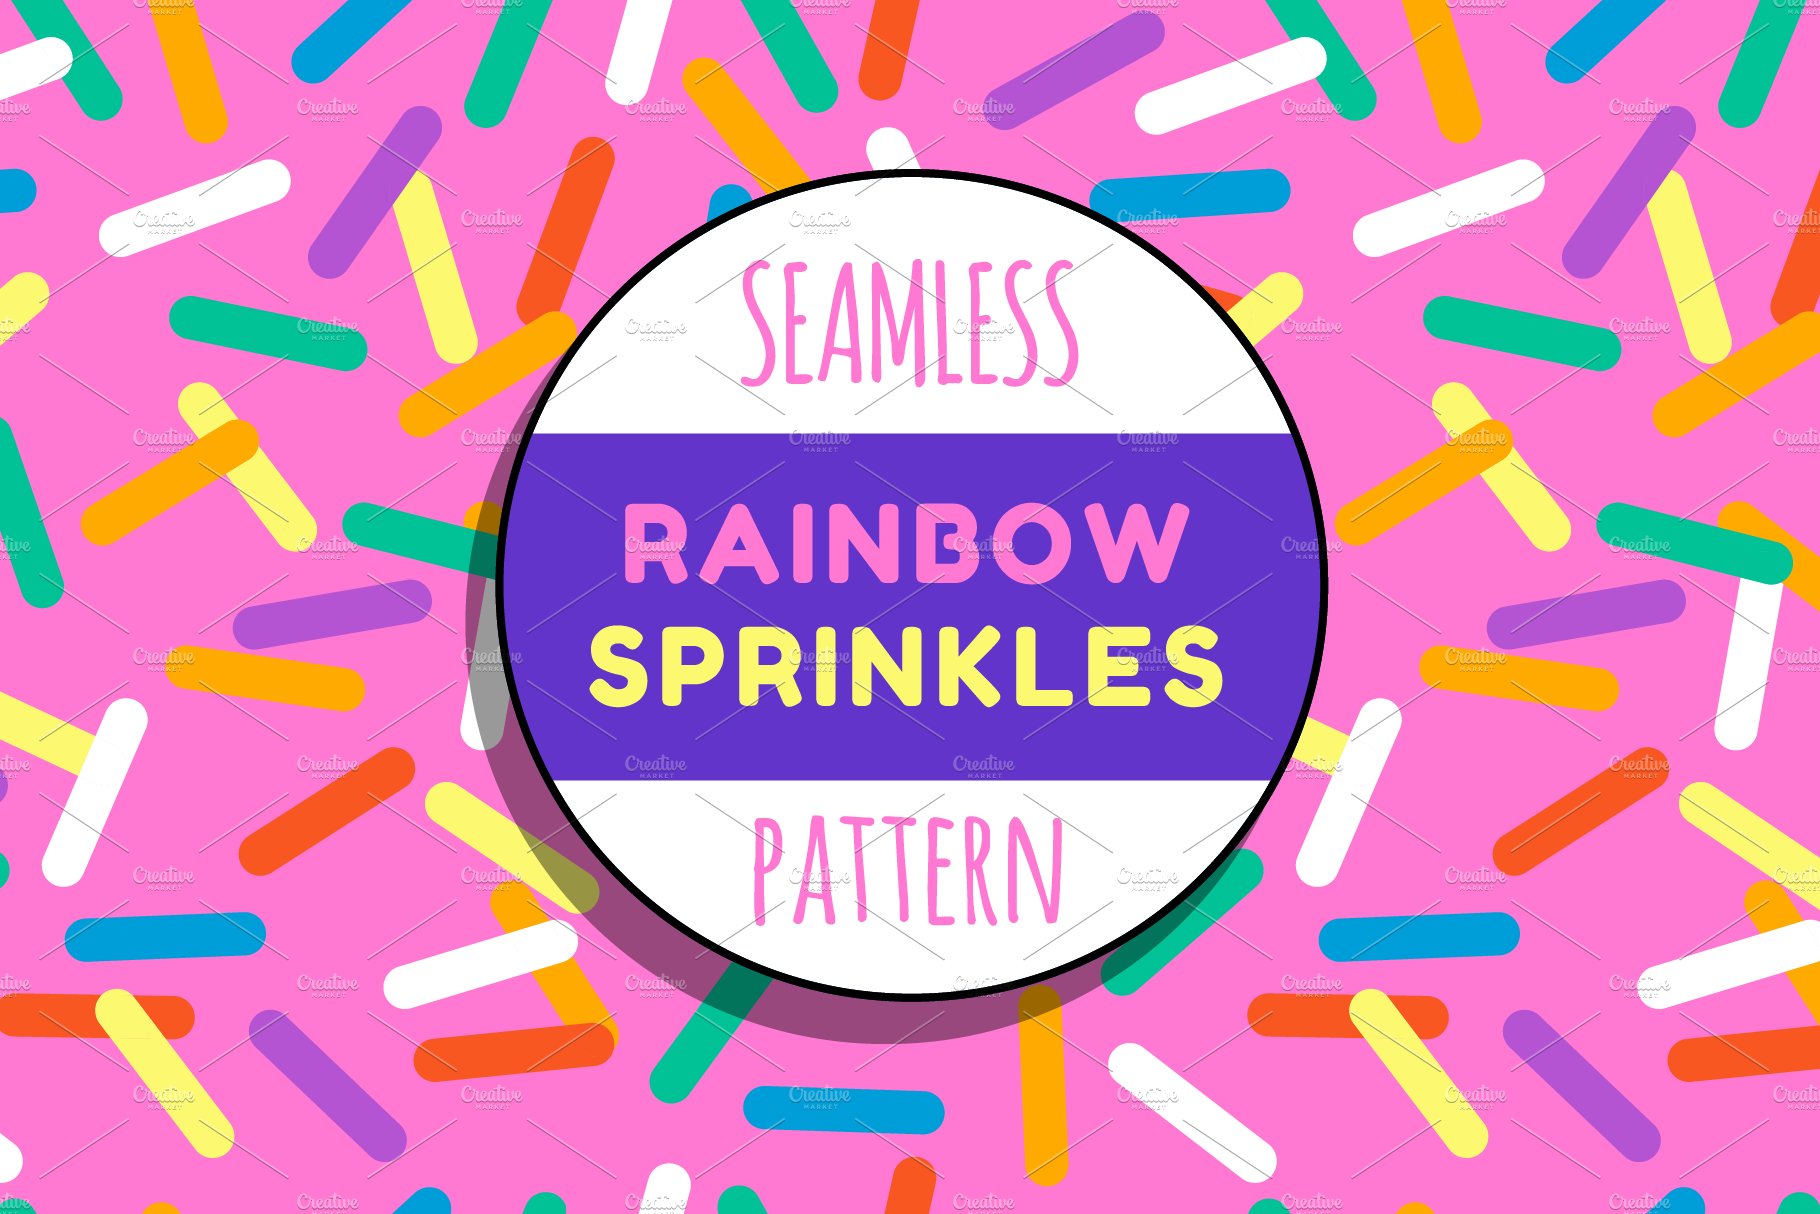 Rainbow Sprinkles Seamless pattern cover image.